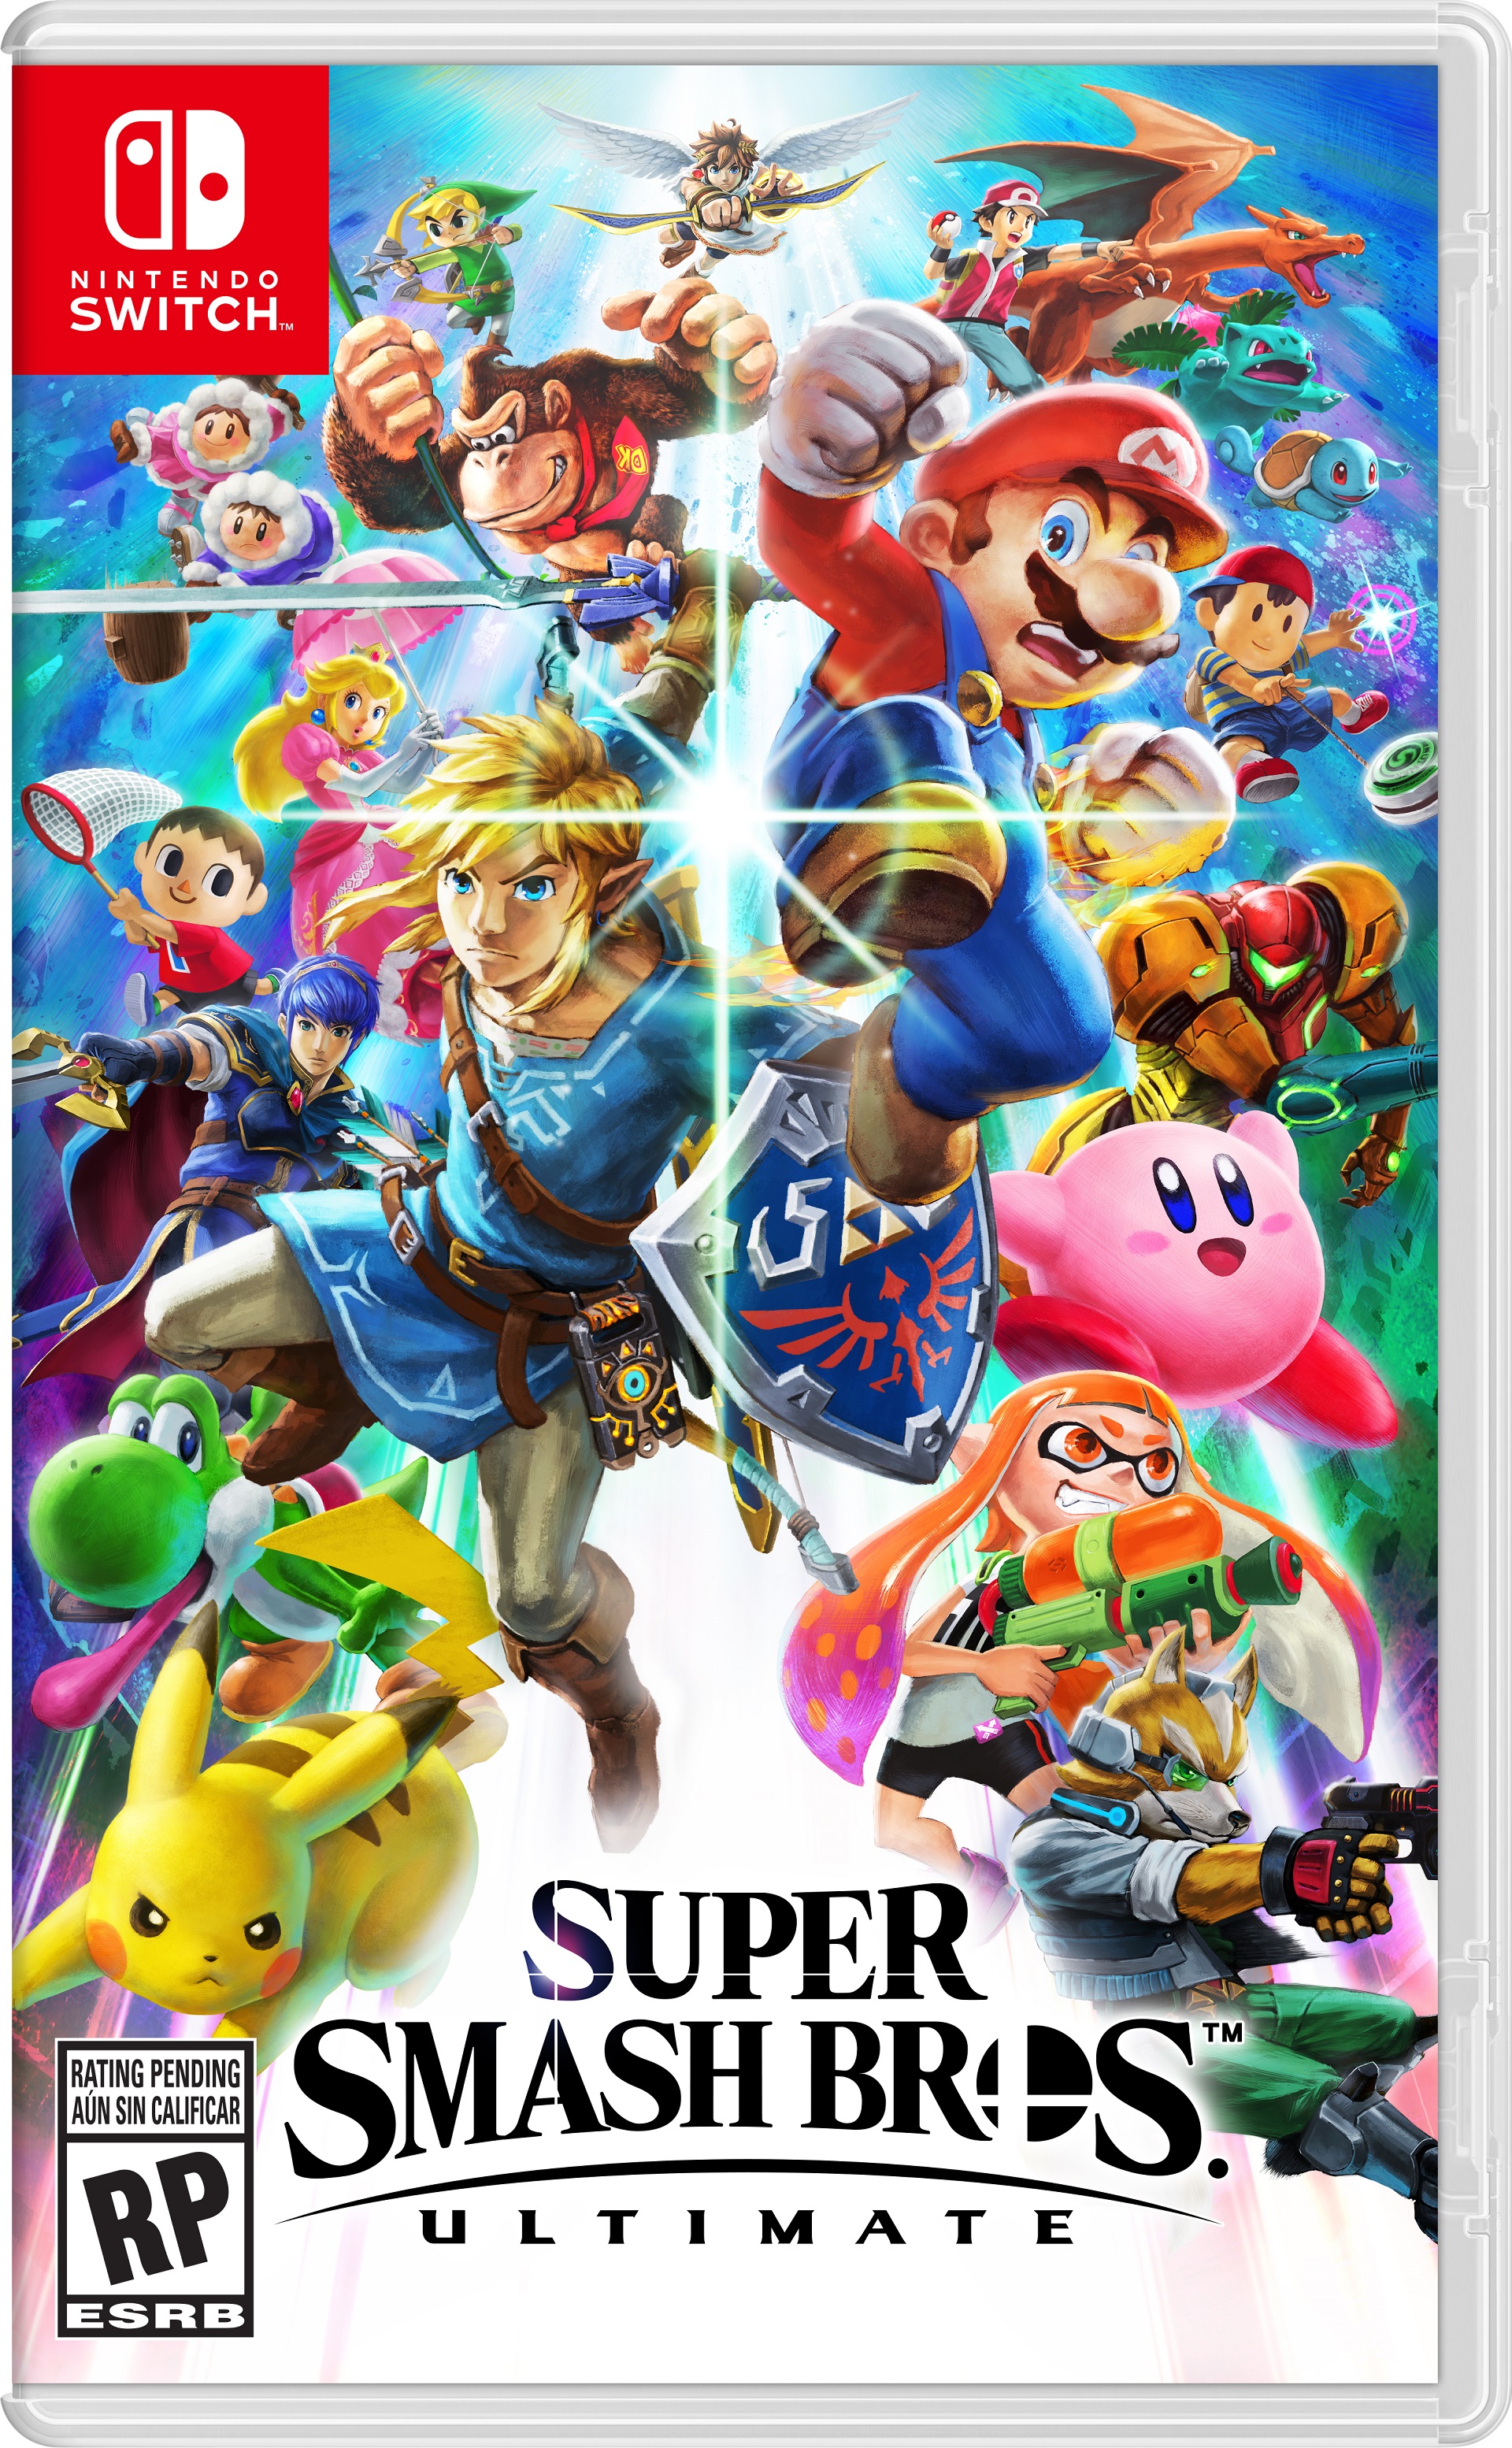 E3 2018: Nintendo Smashes E3 with 2018 Lineup, Details about Super Smash Bros. Ultimate